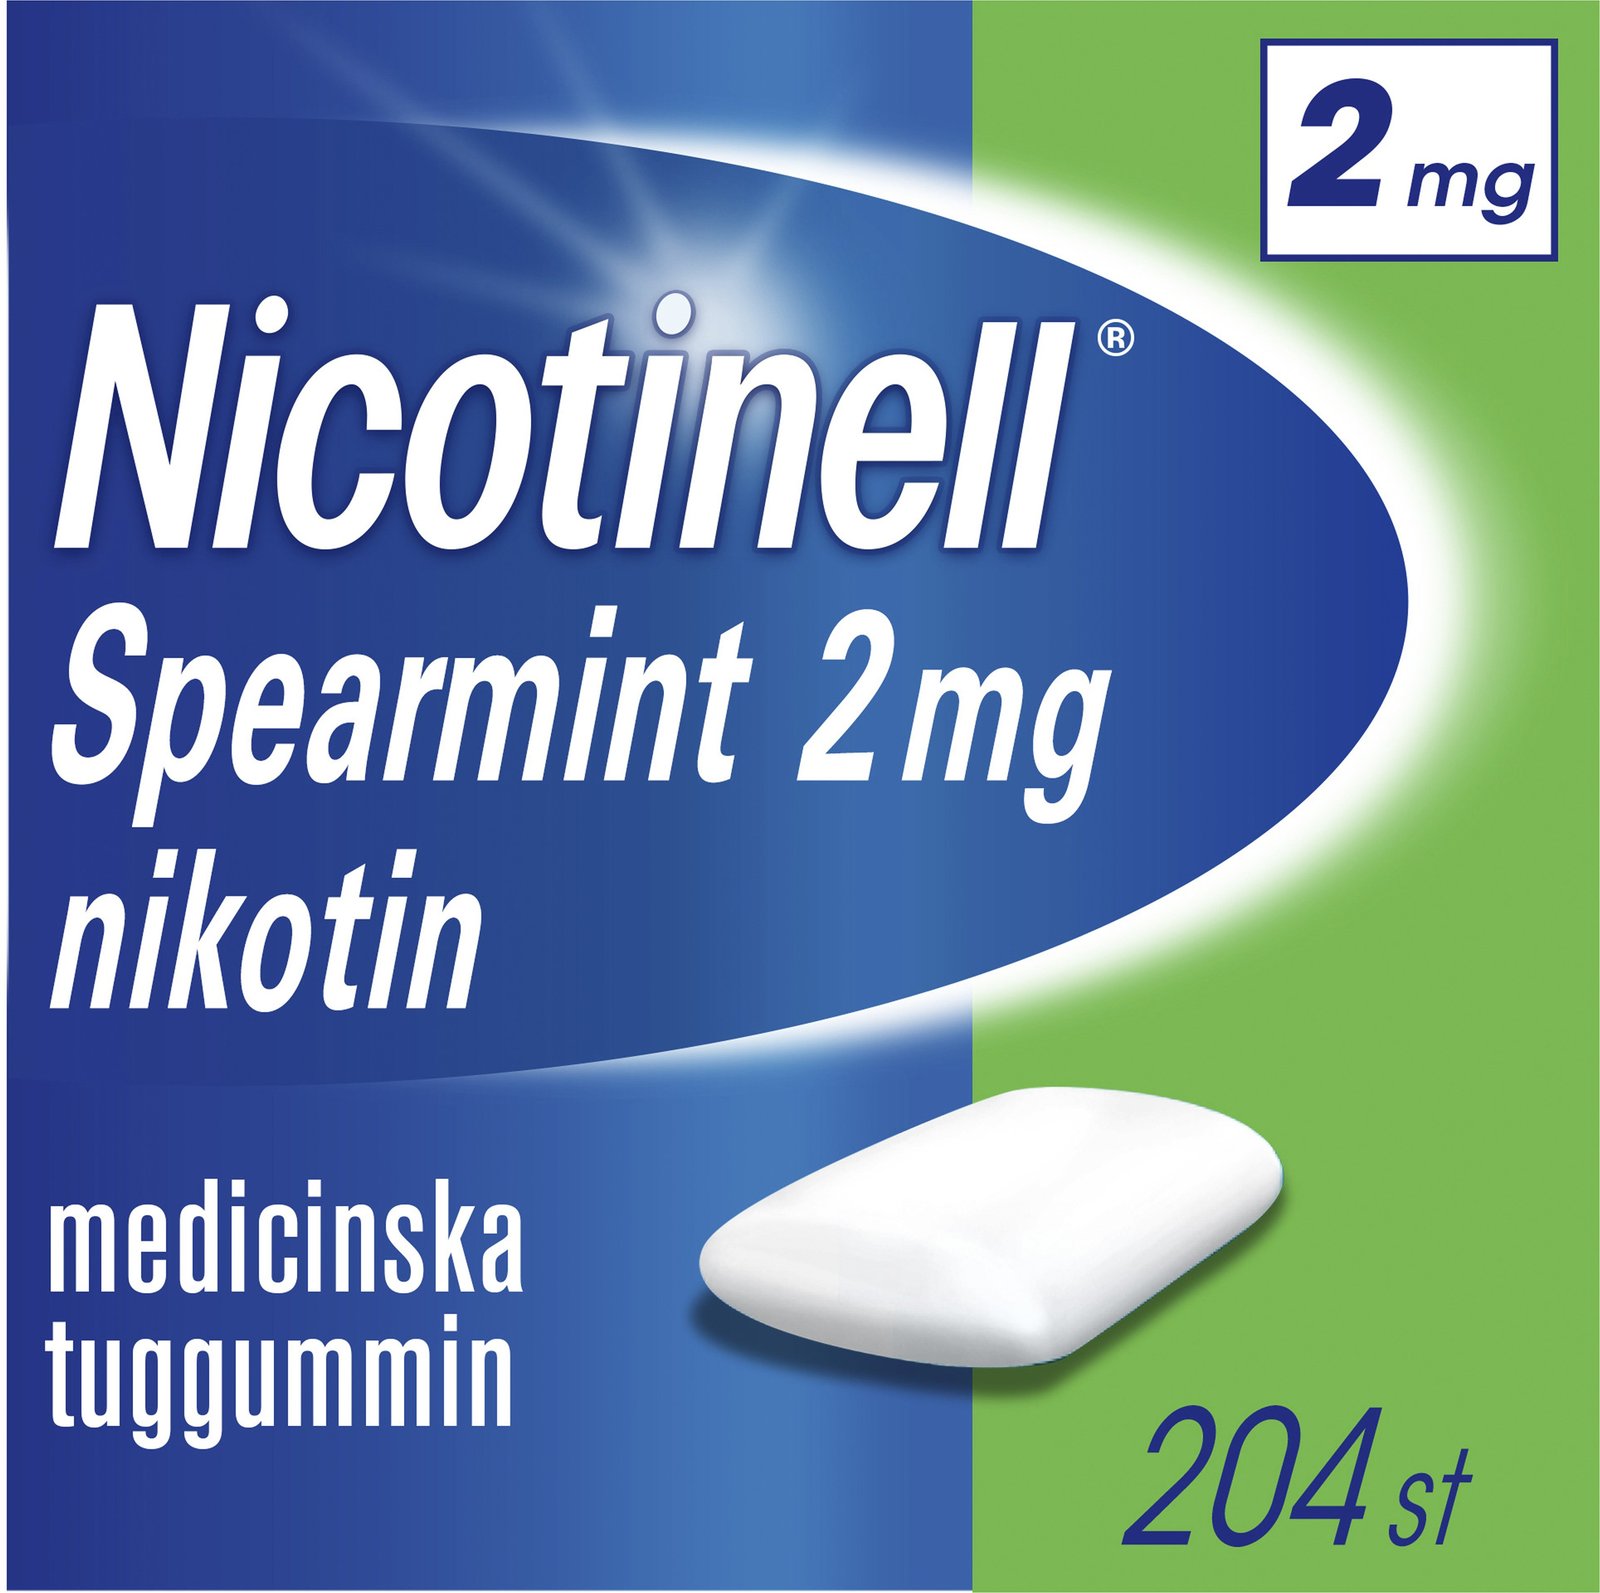 Nicotinell Spearmint 2 mg Nikotin Medicinska tuggummin 204 st